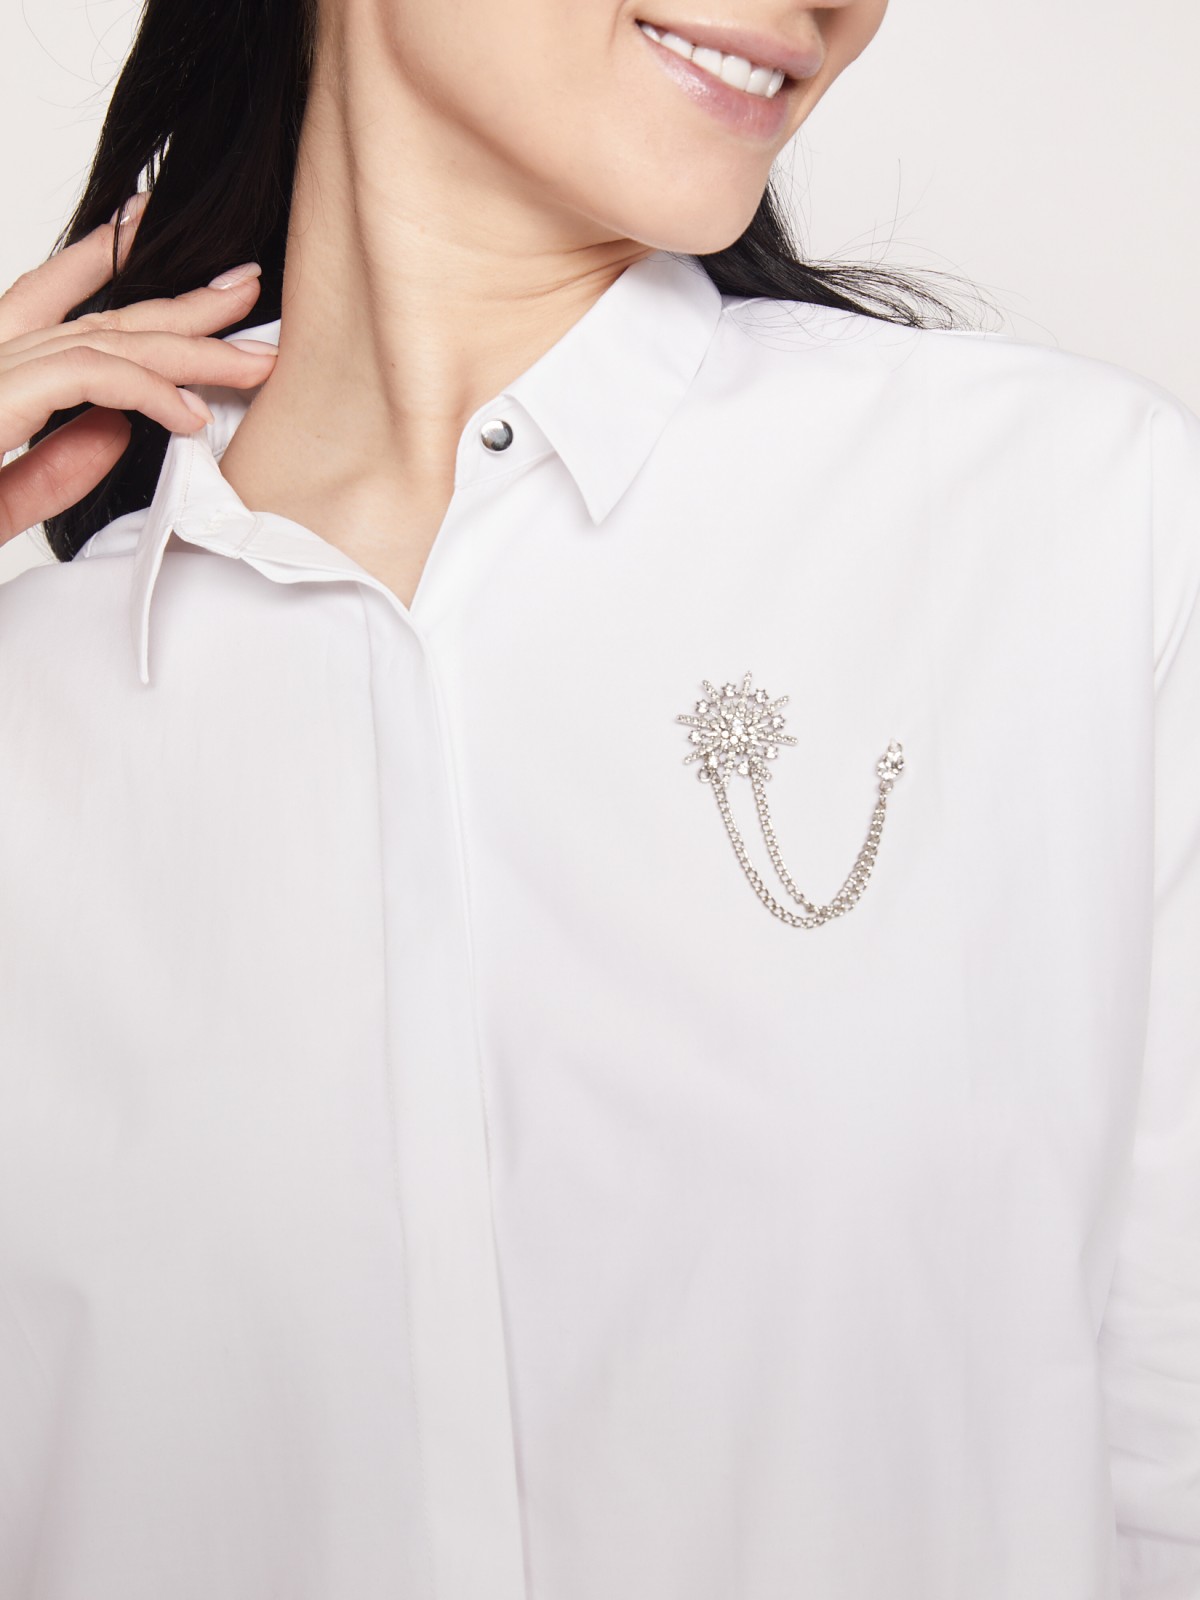 Рубашка с декоративной брошью zolla 221311159123, цвет белый, размер XS - фото 3